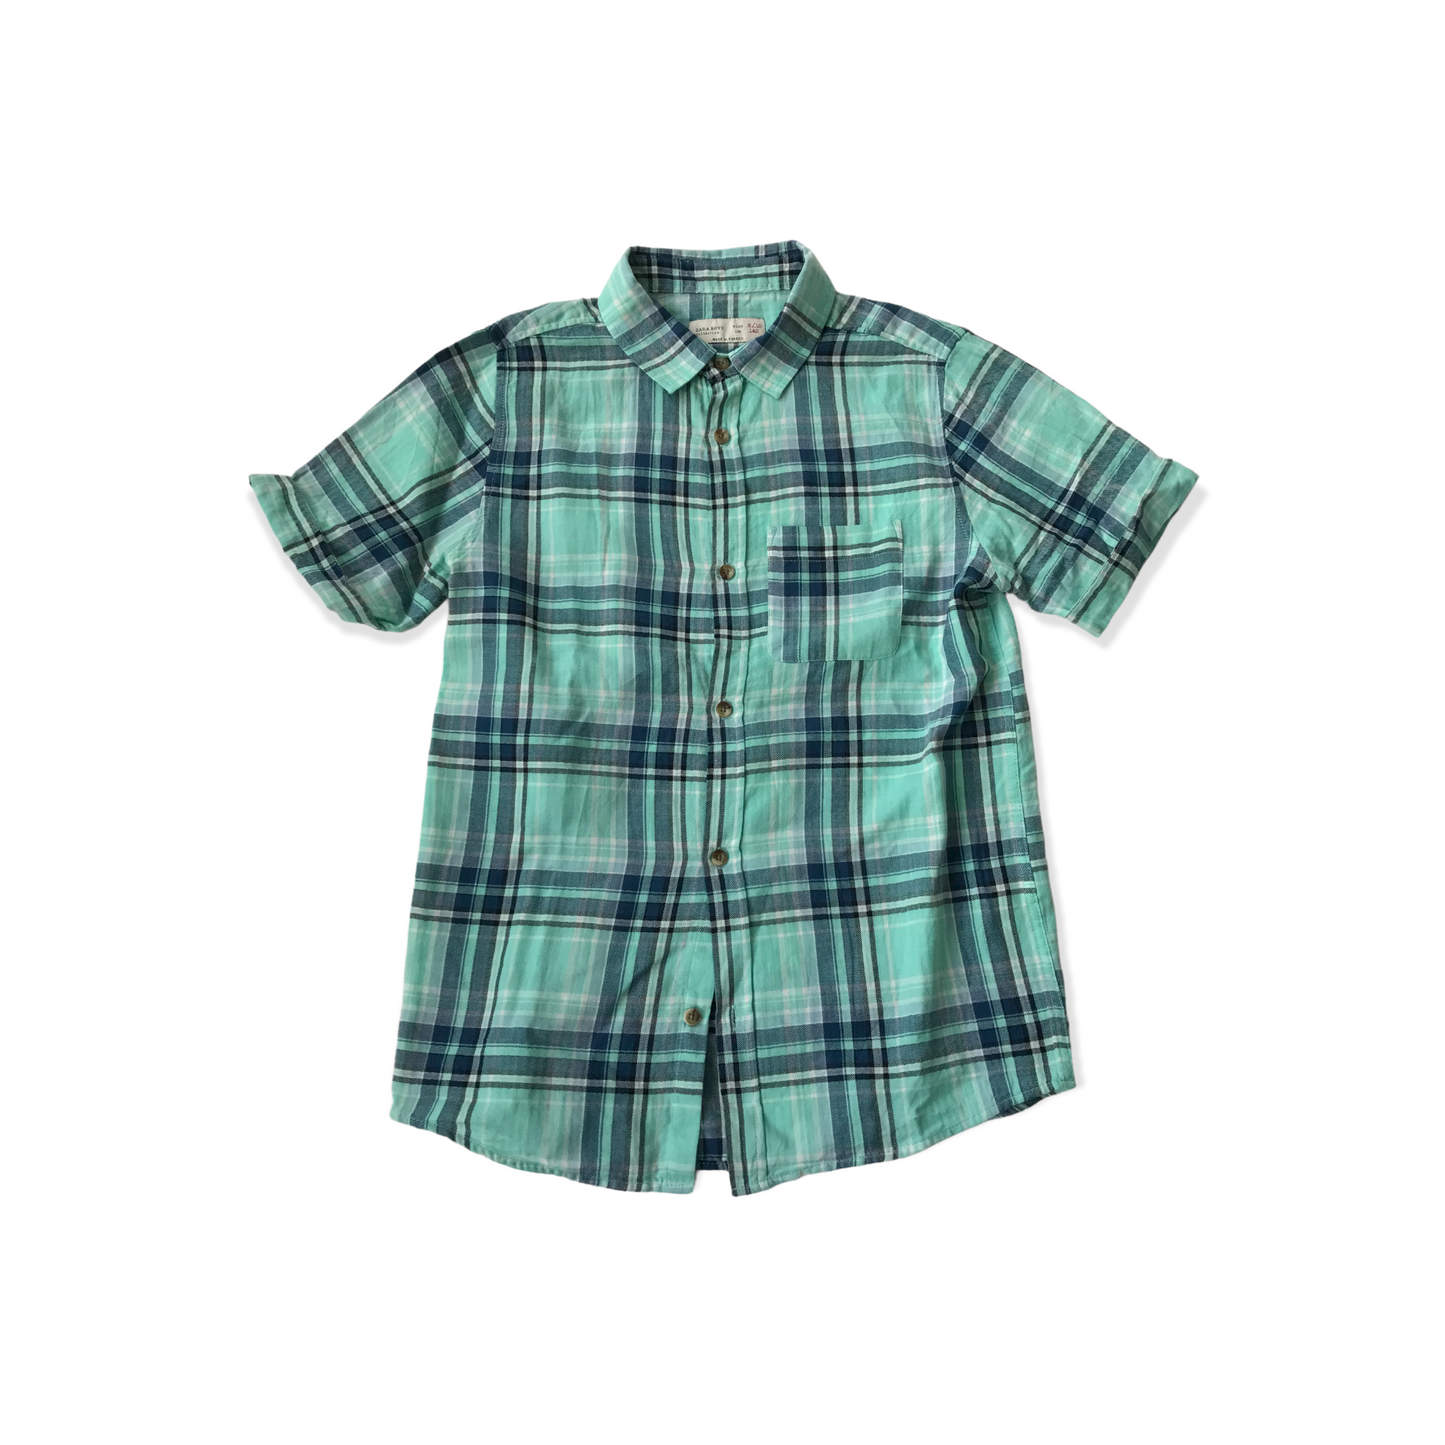 Zara Mint Green Check Short Sleeve Shirt Age 9